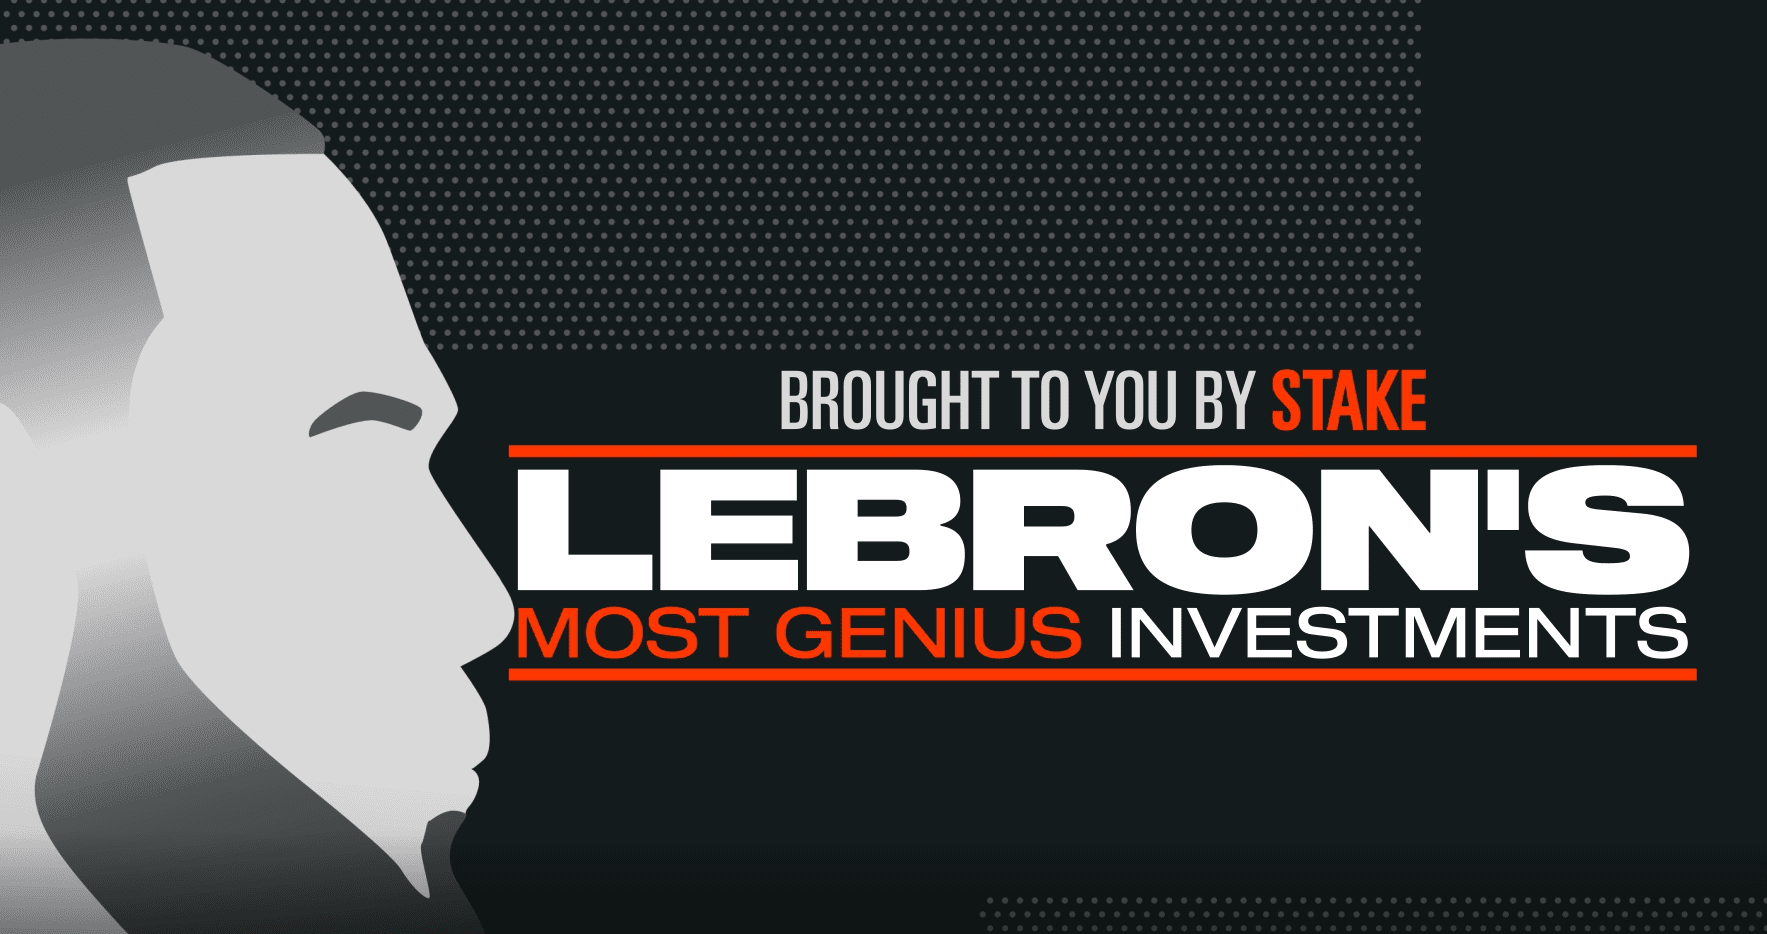 LeBron James’ Most Genius Investments